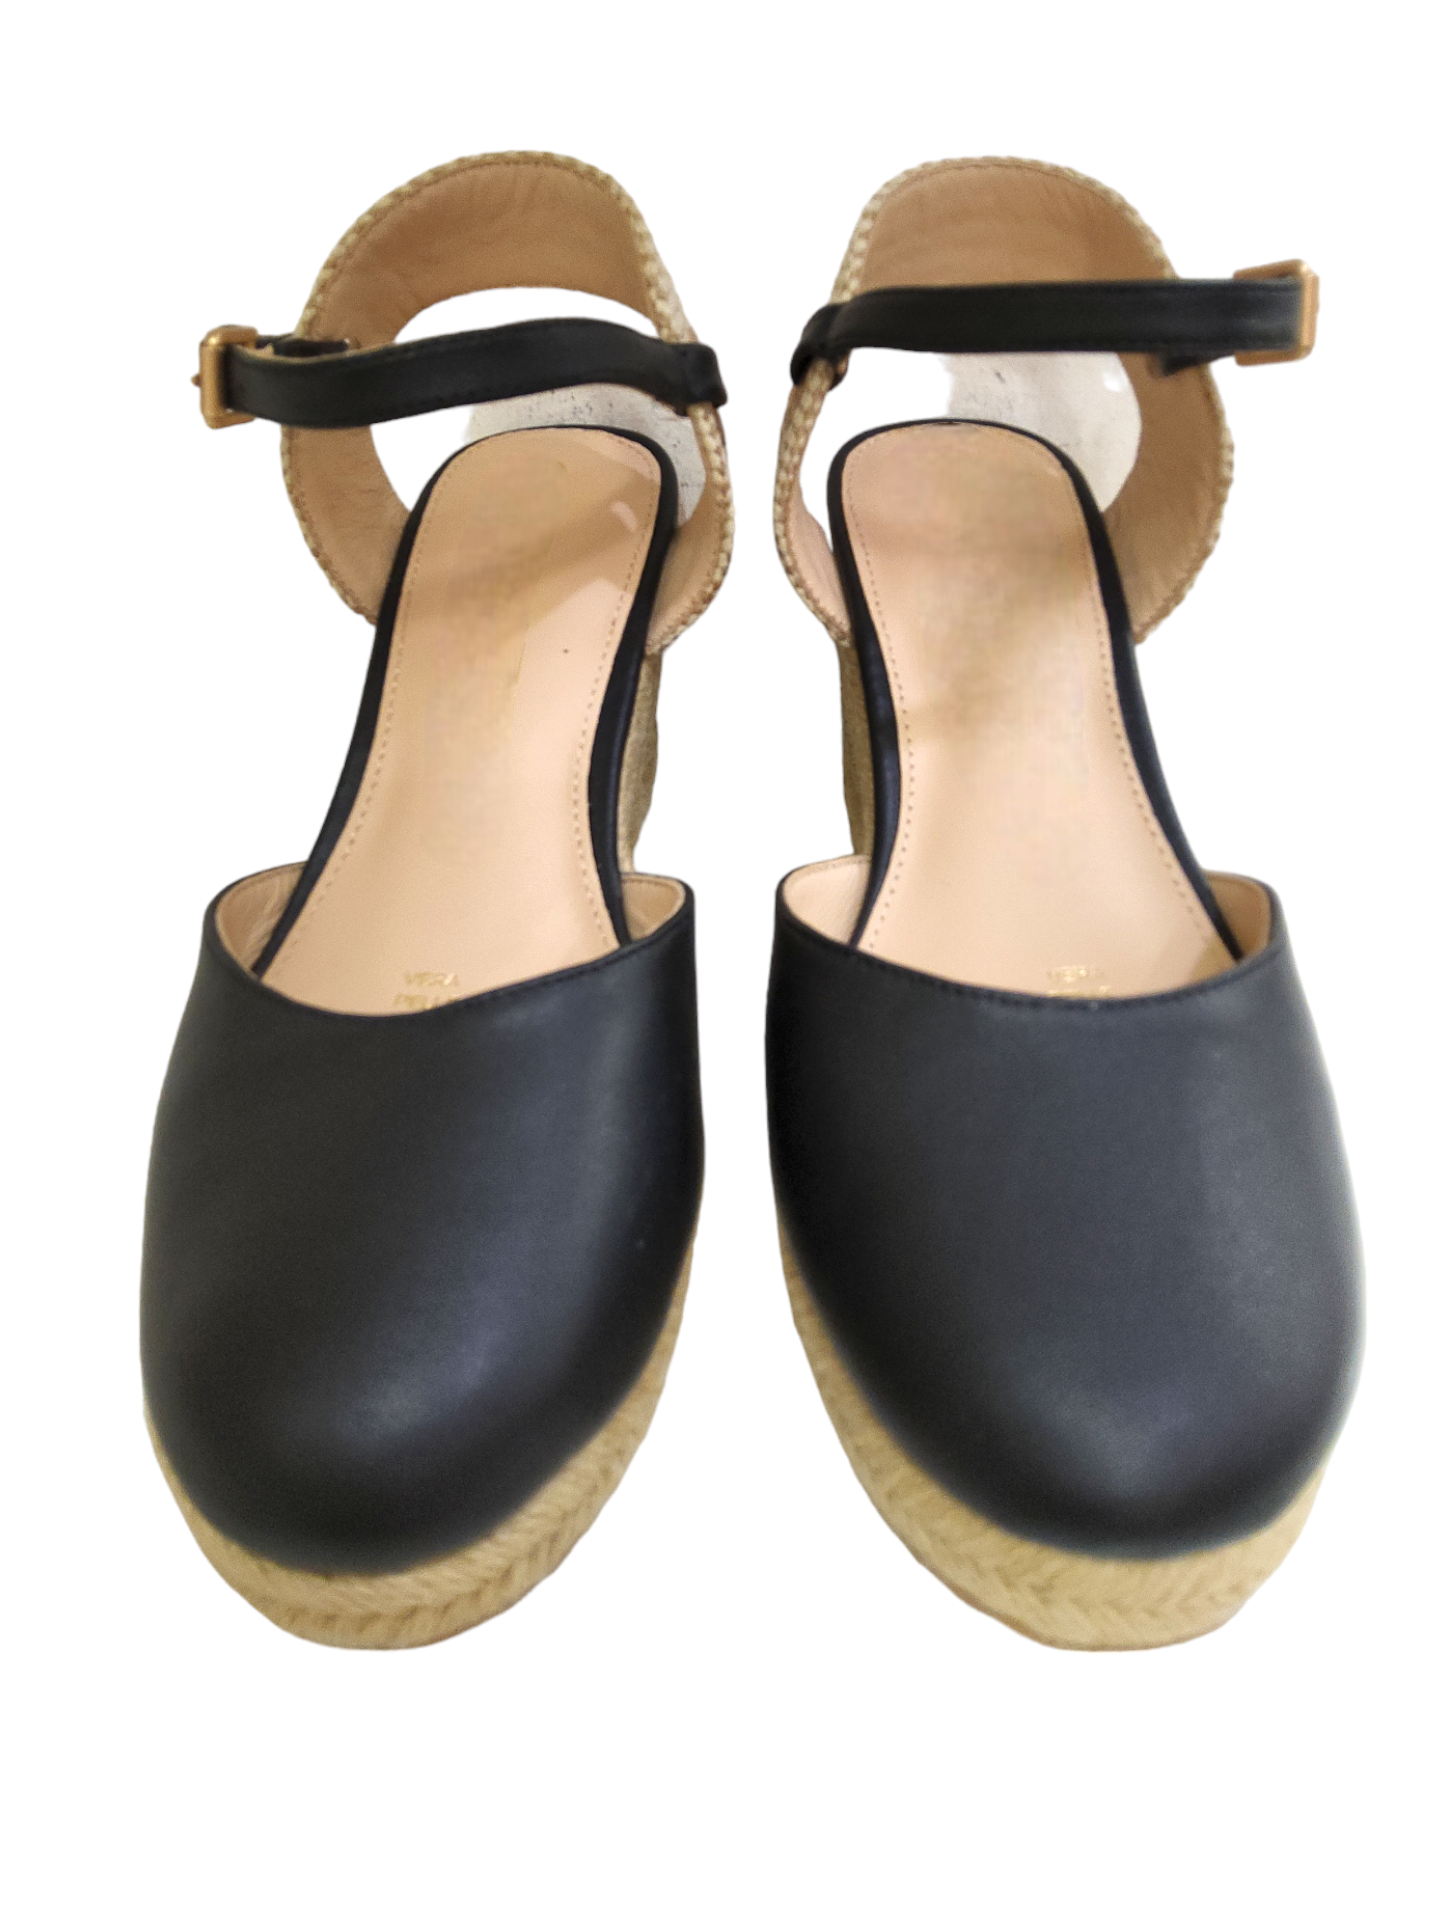 Black leather sandals